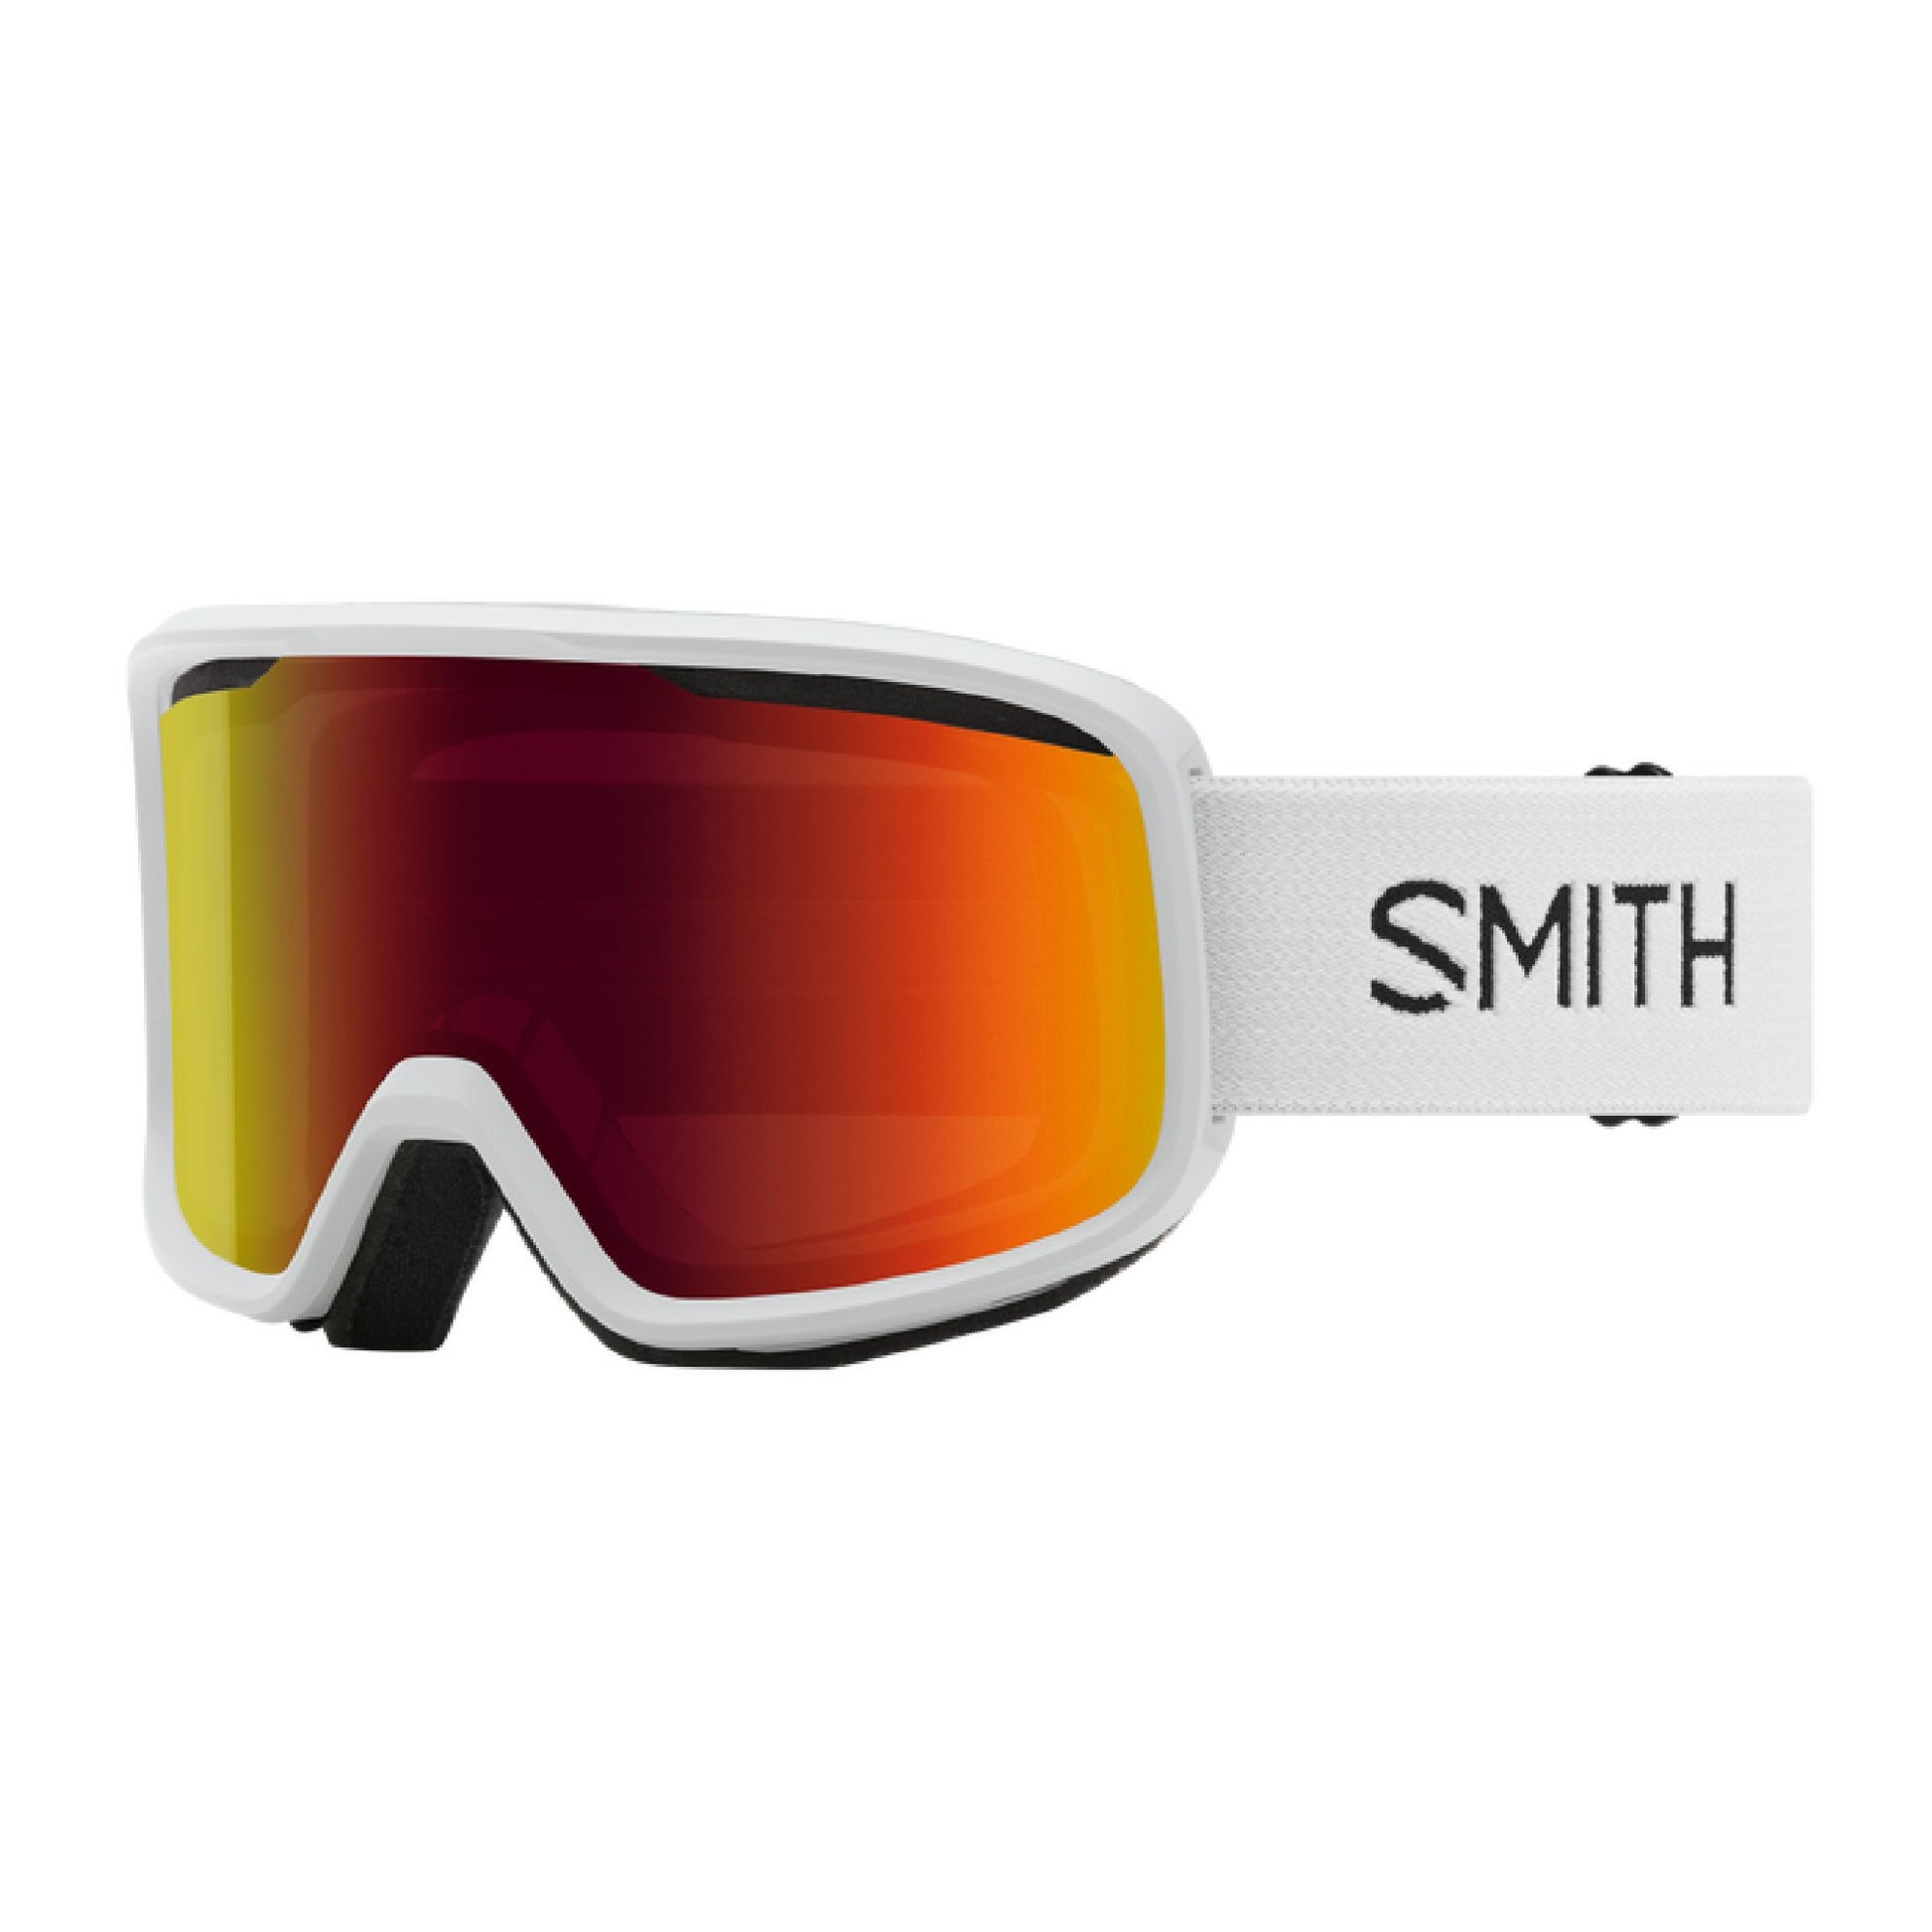 Smith Frontier Snow Goggle White / Red Sol-X Mirror Snow Goggles